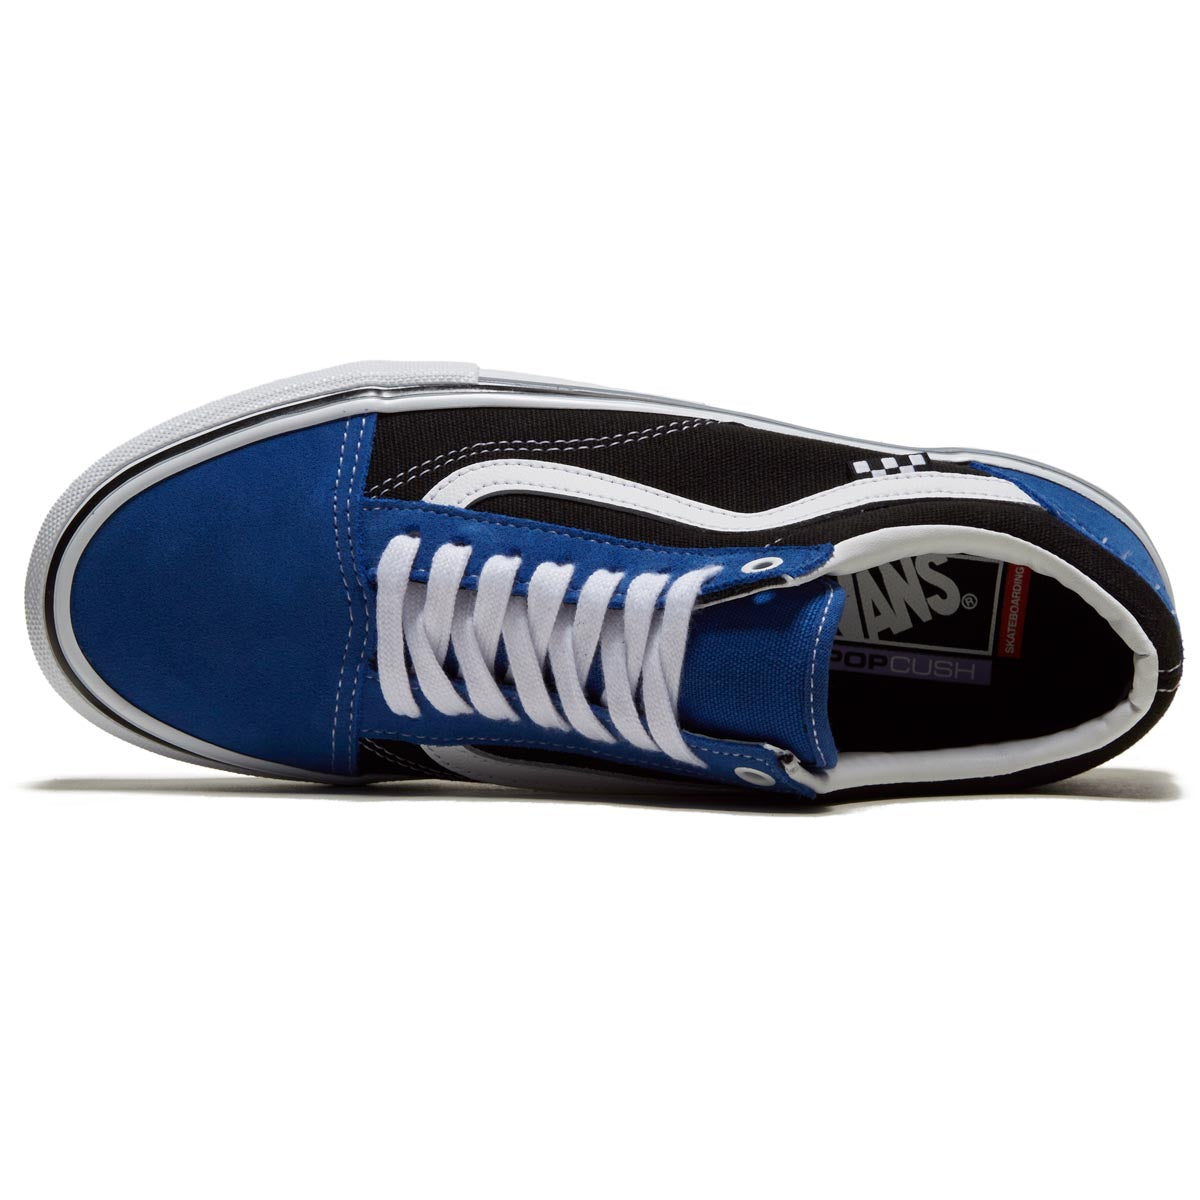 Vans Skate Old Skool Shoes - Blue/Black/White image 3